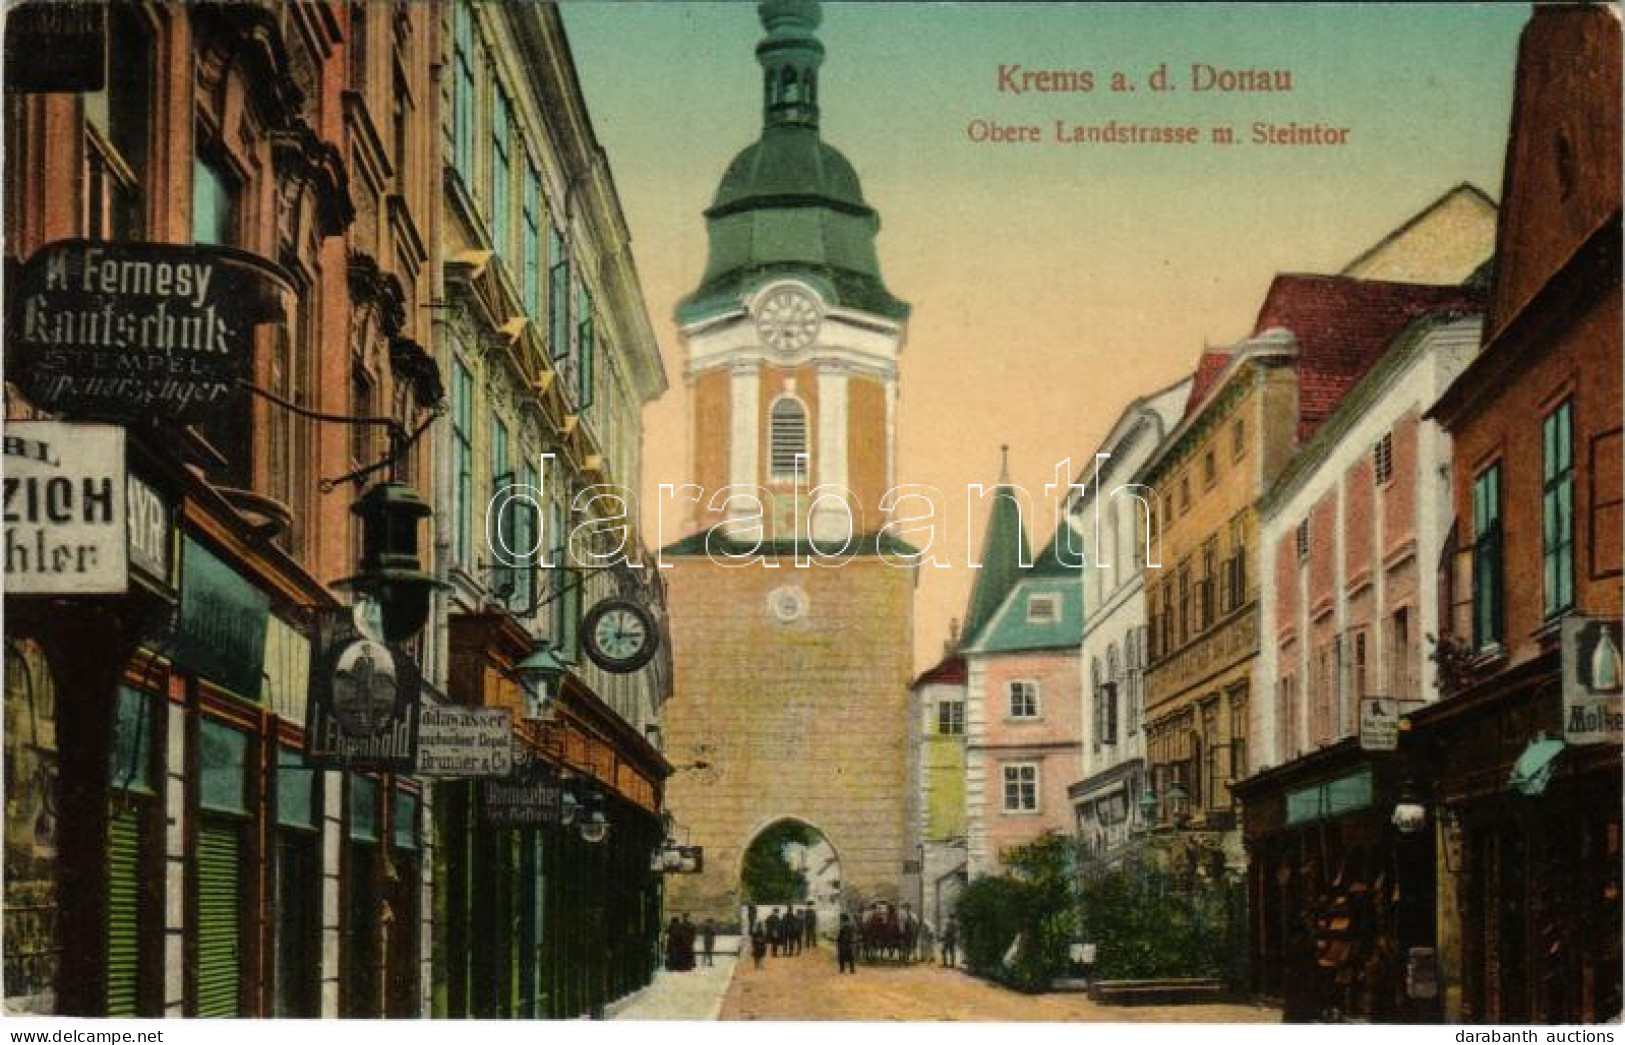 T2 1912 Krems An Der Donau, Obere Landstrasse M. Steintor / Street View, Gate, Shop Of K. Fernesy - Non Classés